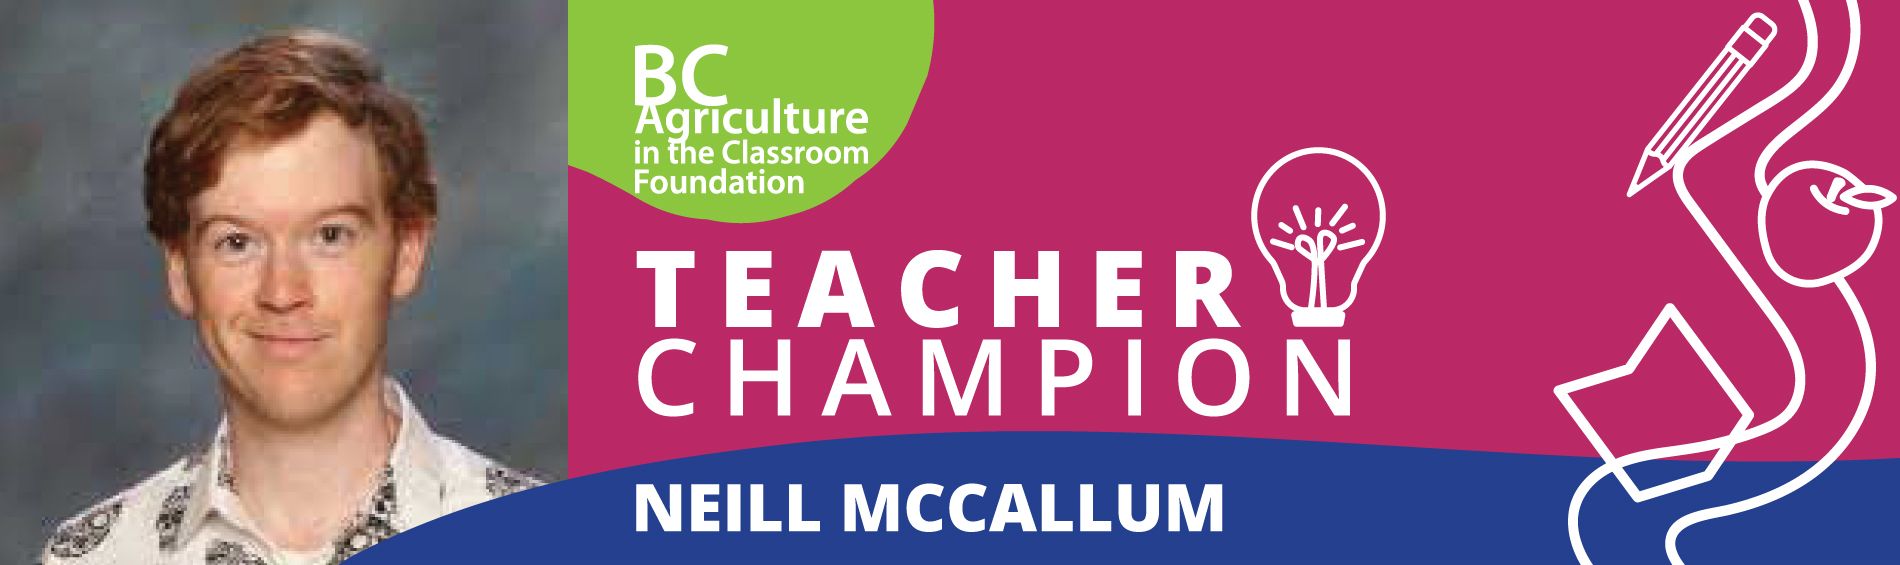 Neill McCallum - Teacher Champion